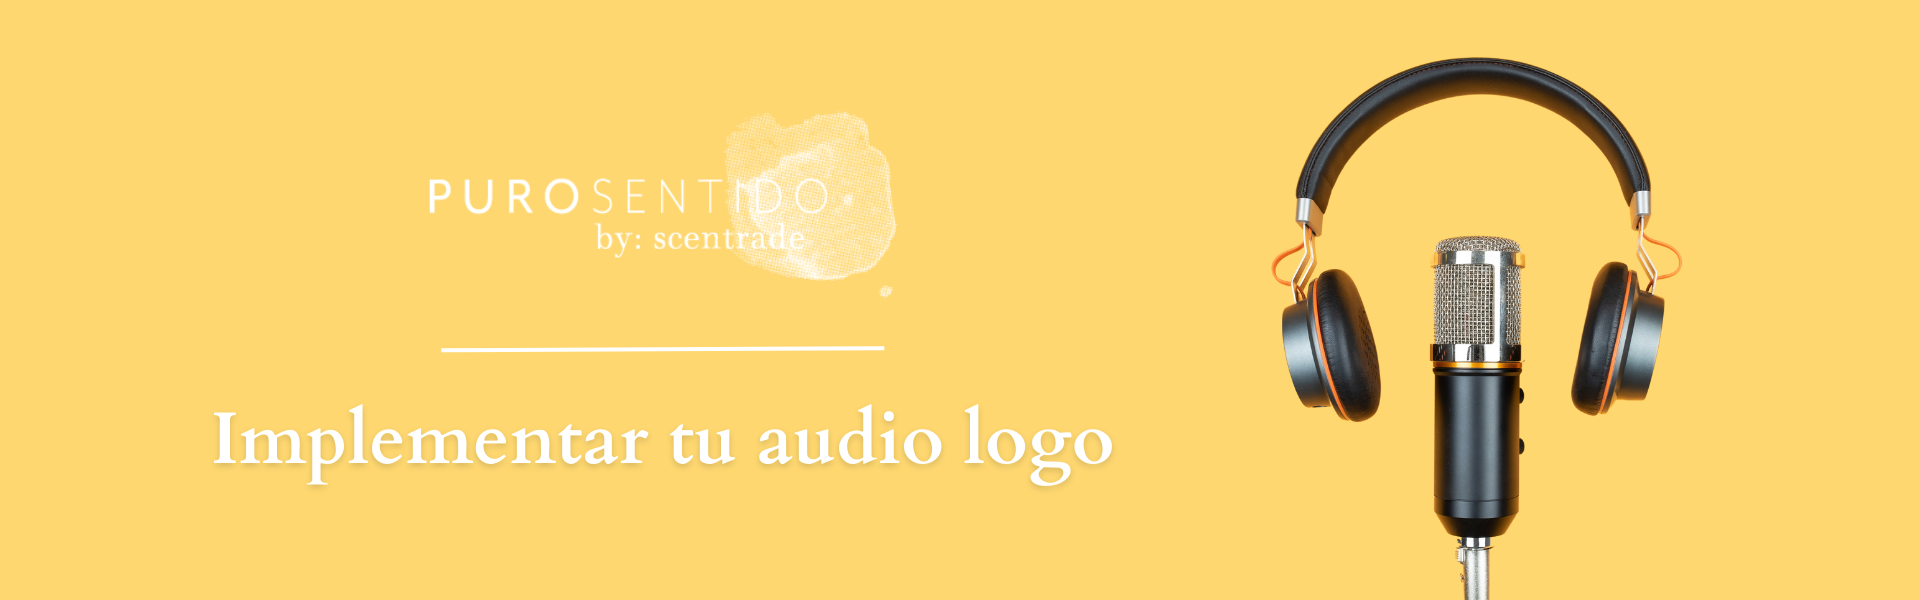 audio logo estrategias de marketing